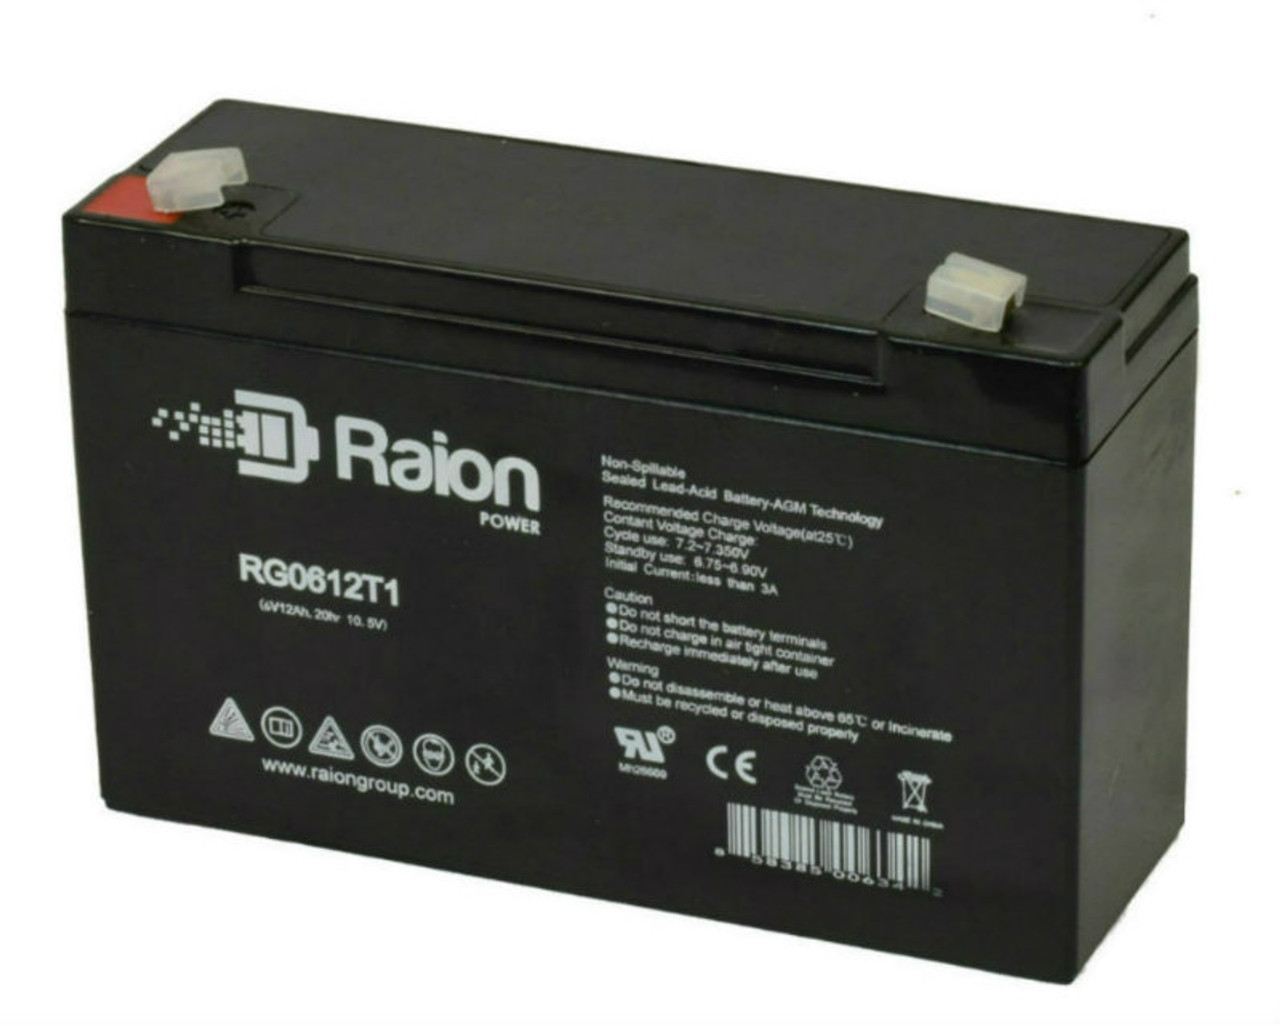 Raion Power RG06120T1 Replacement 6V 12Ah Emergency Light Battery for Elan 1637